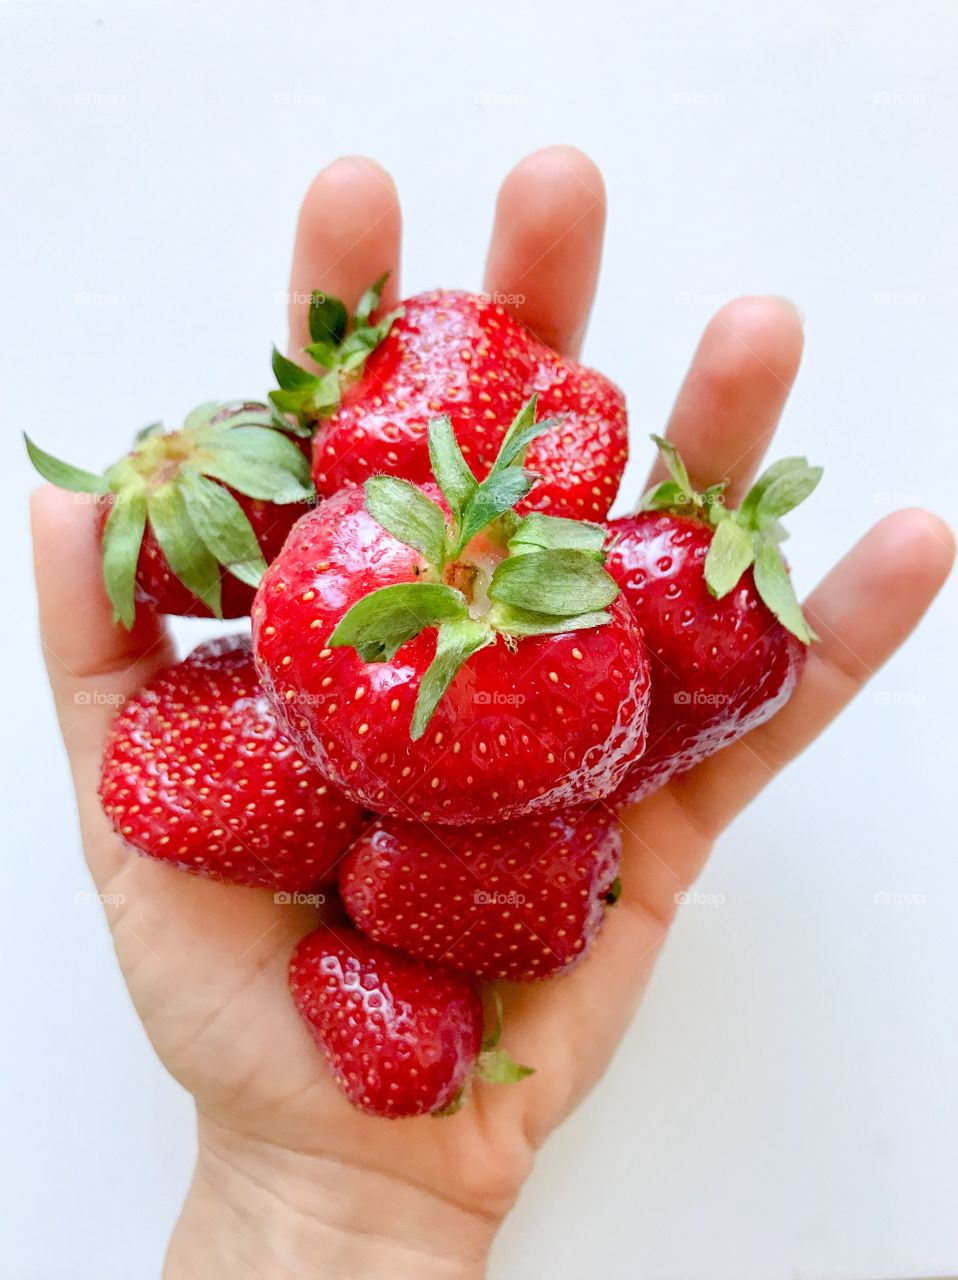 Sweet strawberry season. A hand full of strawberries